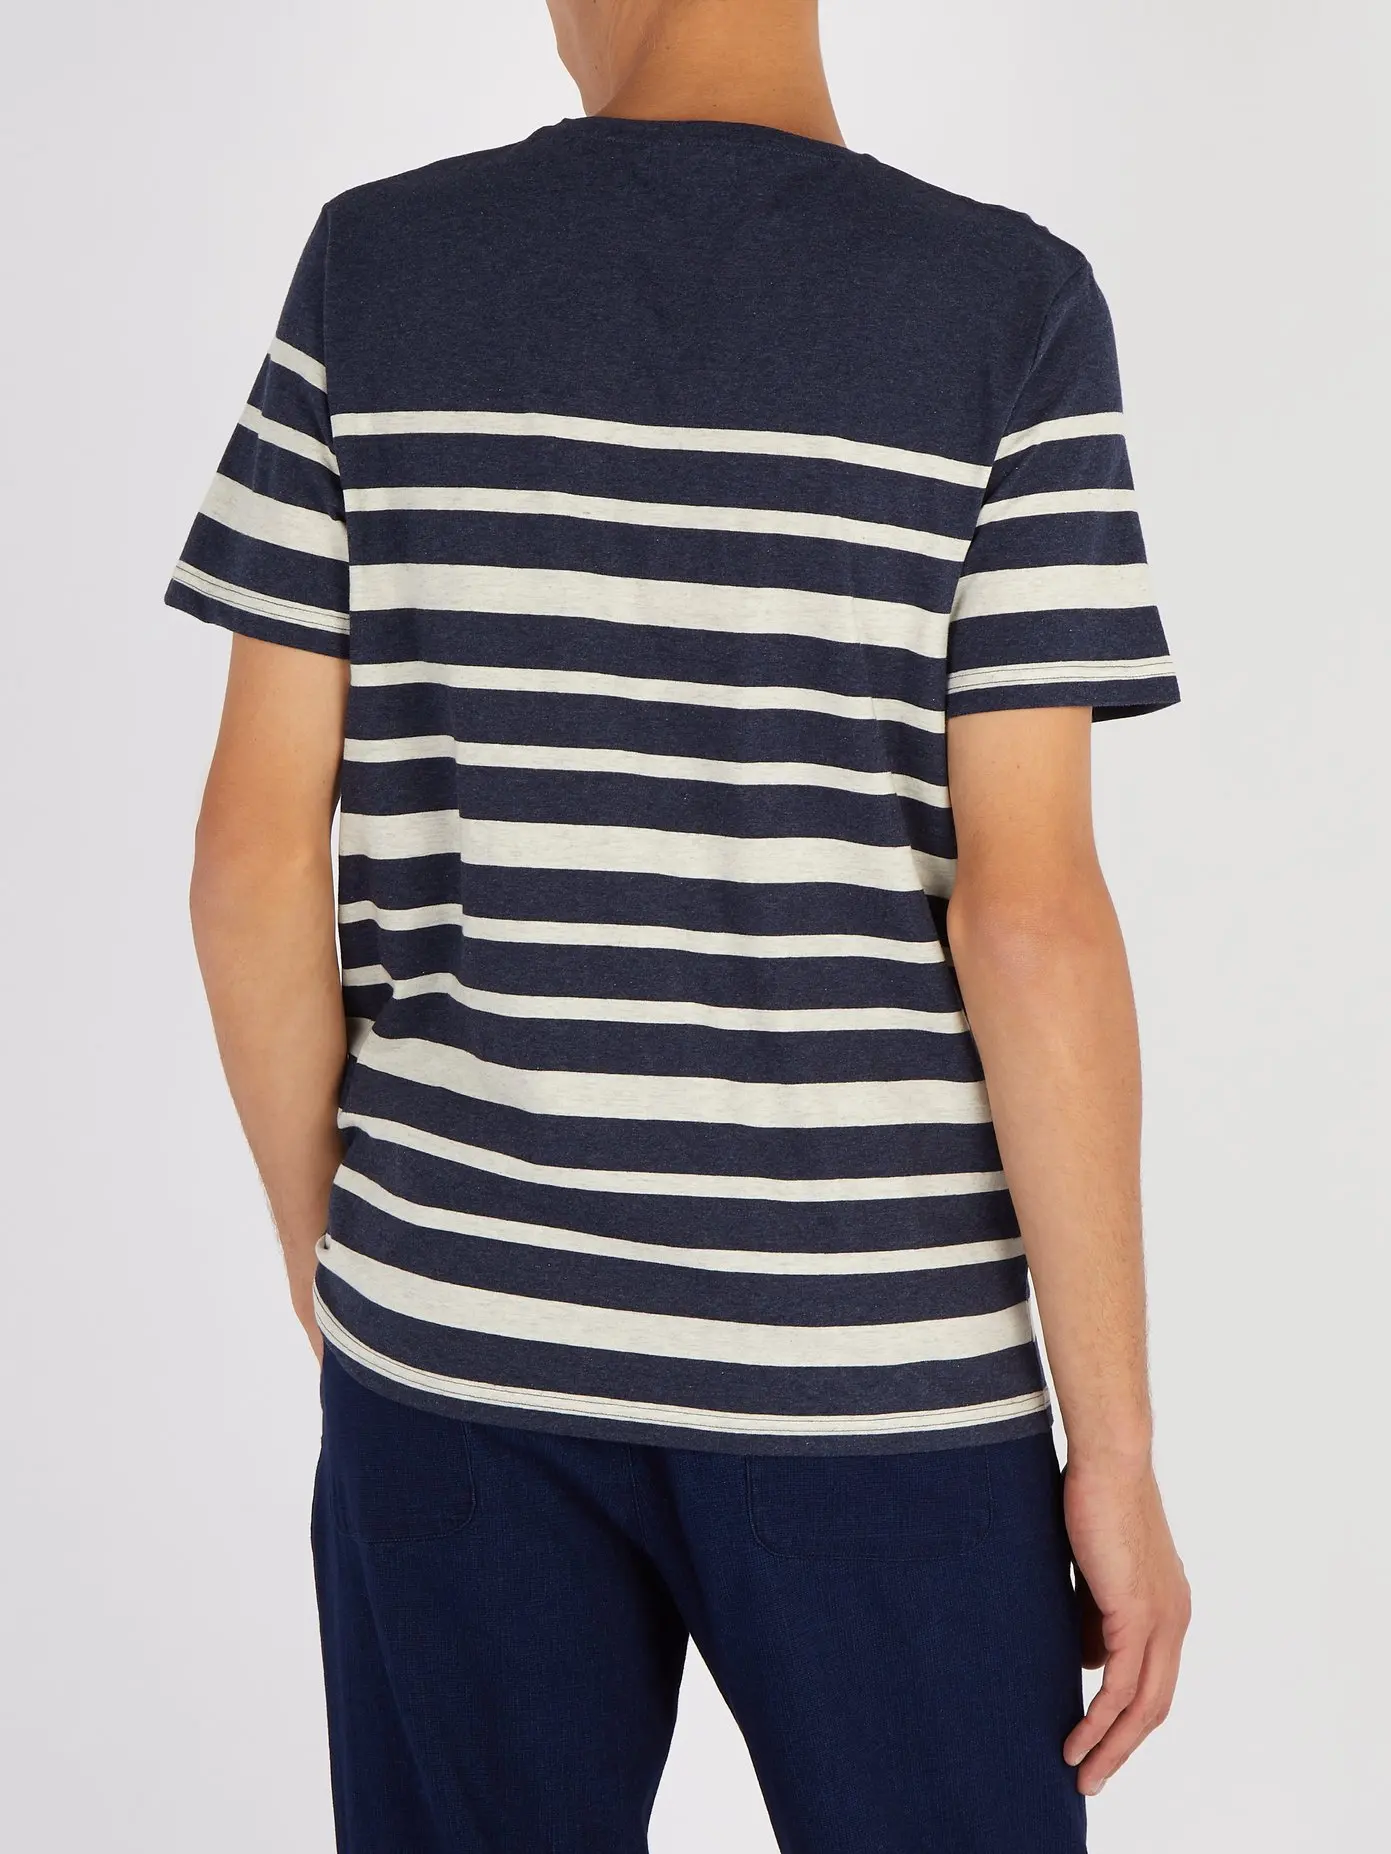 Fashion New Style Blank Tee Shirts 100% Cotton Horizontal Stripe T ...